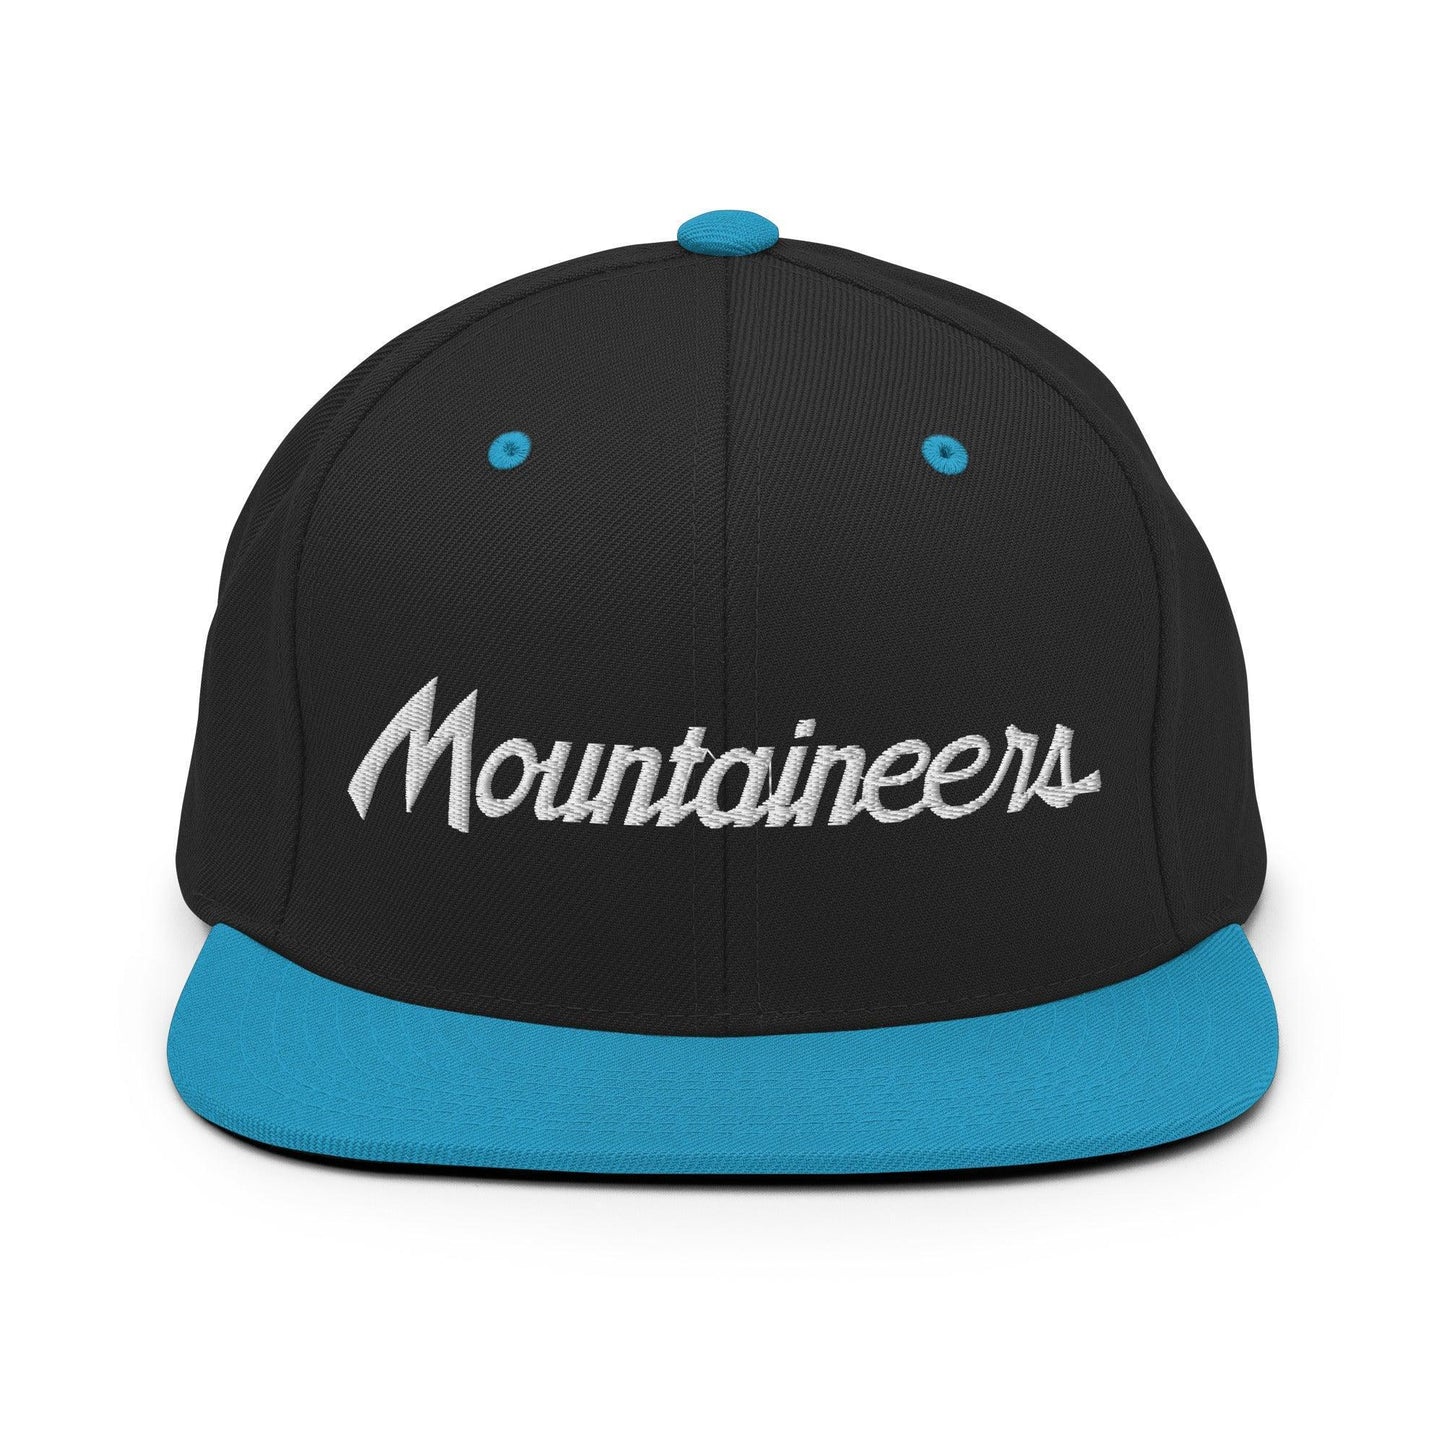 Mountaineers School Mascot Script Snapback Hat Black/ Teal